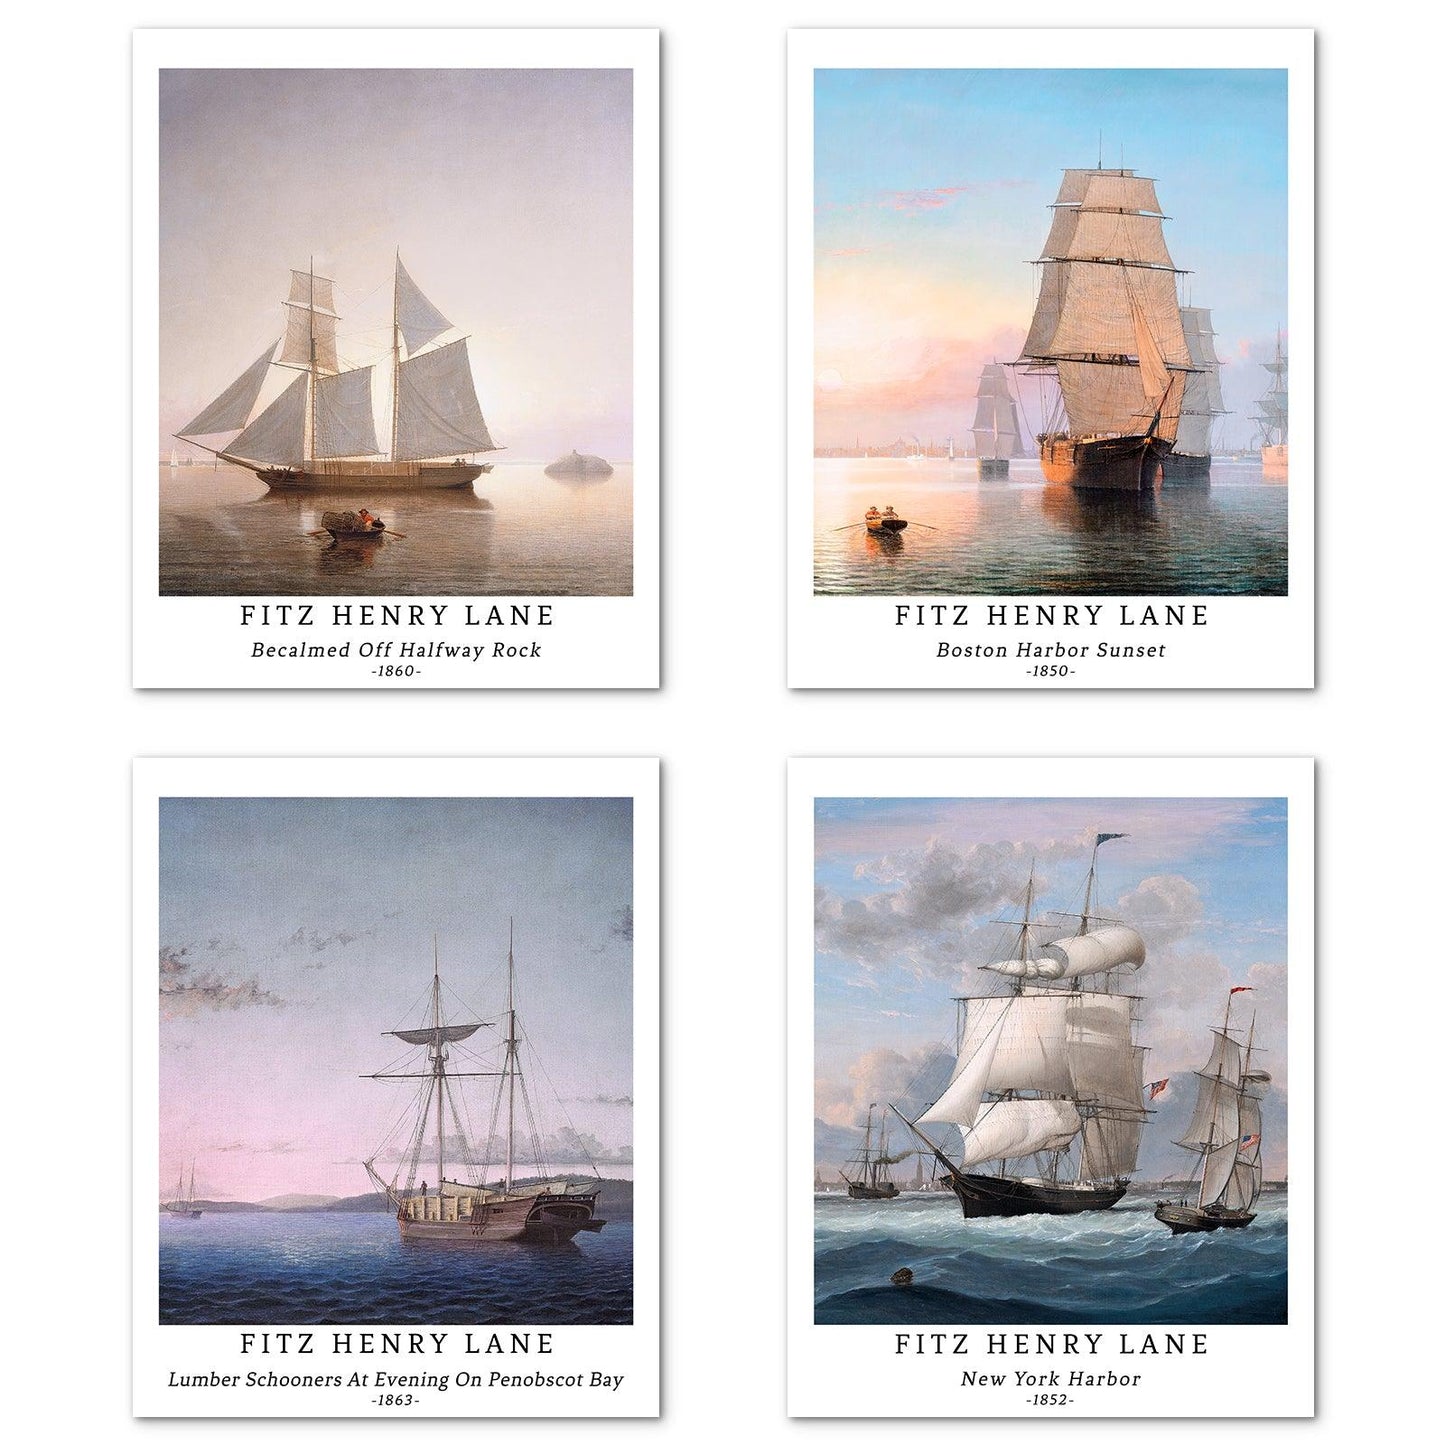 Classical Landscape Art Paper Giclee Prints Set of 4 (Fitz Henry Lane Series) - Berkin Arts